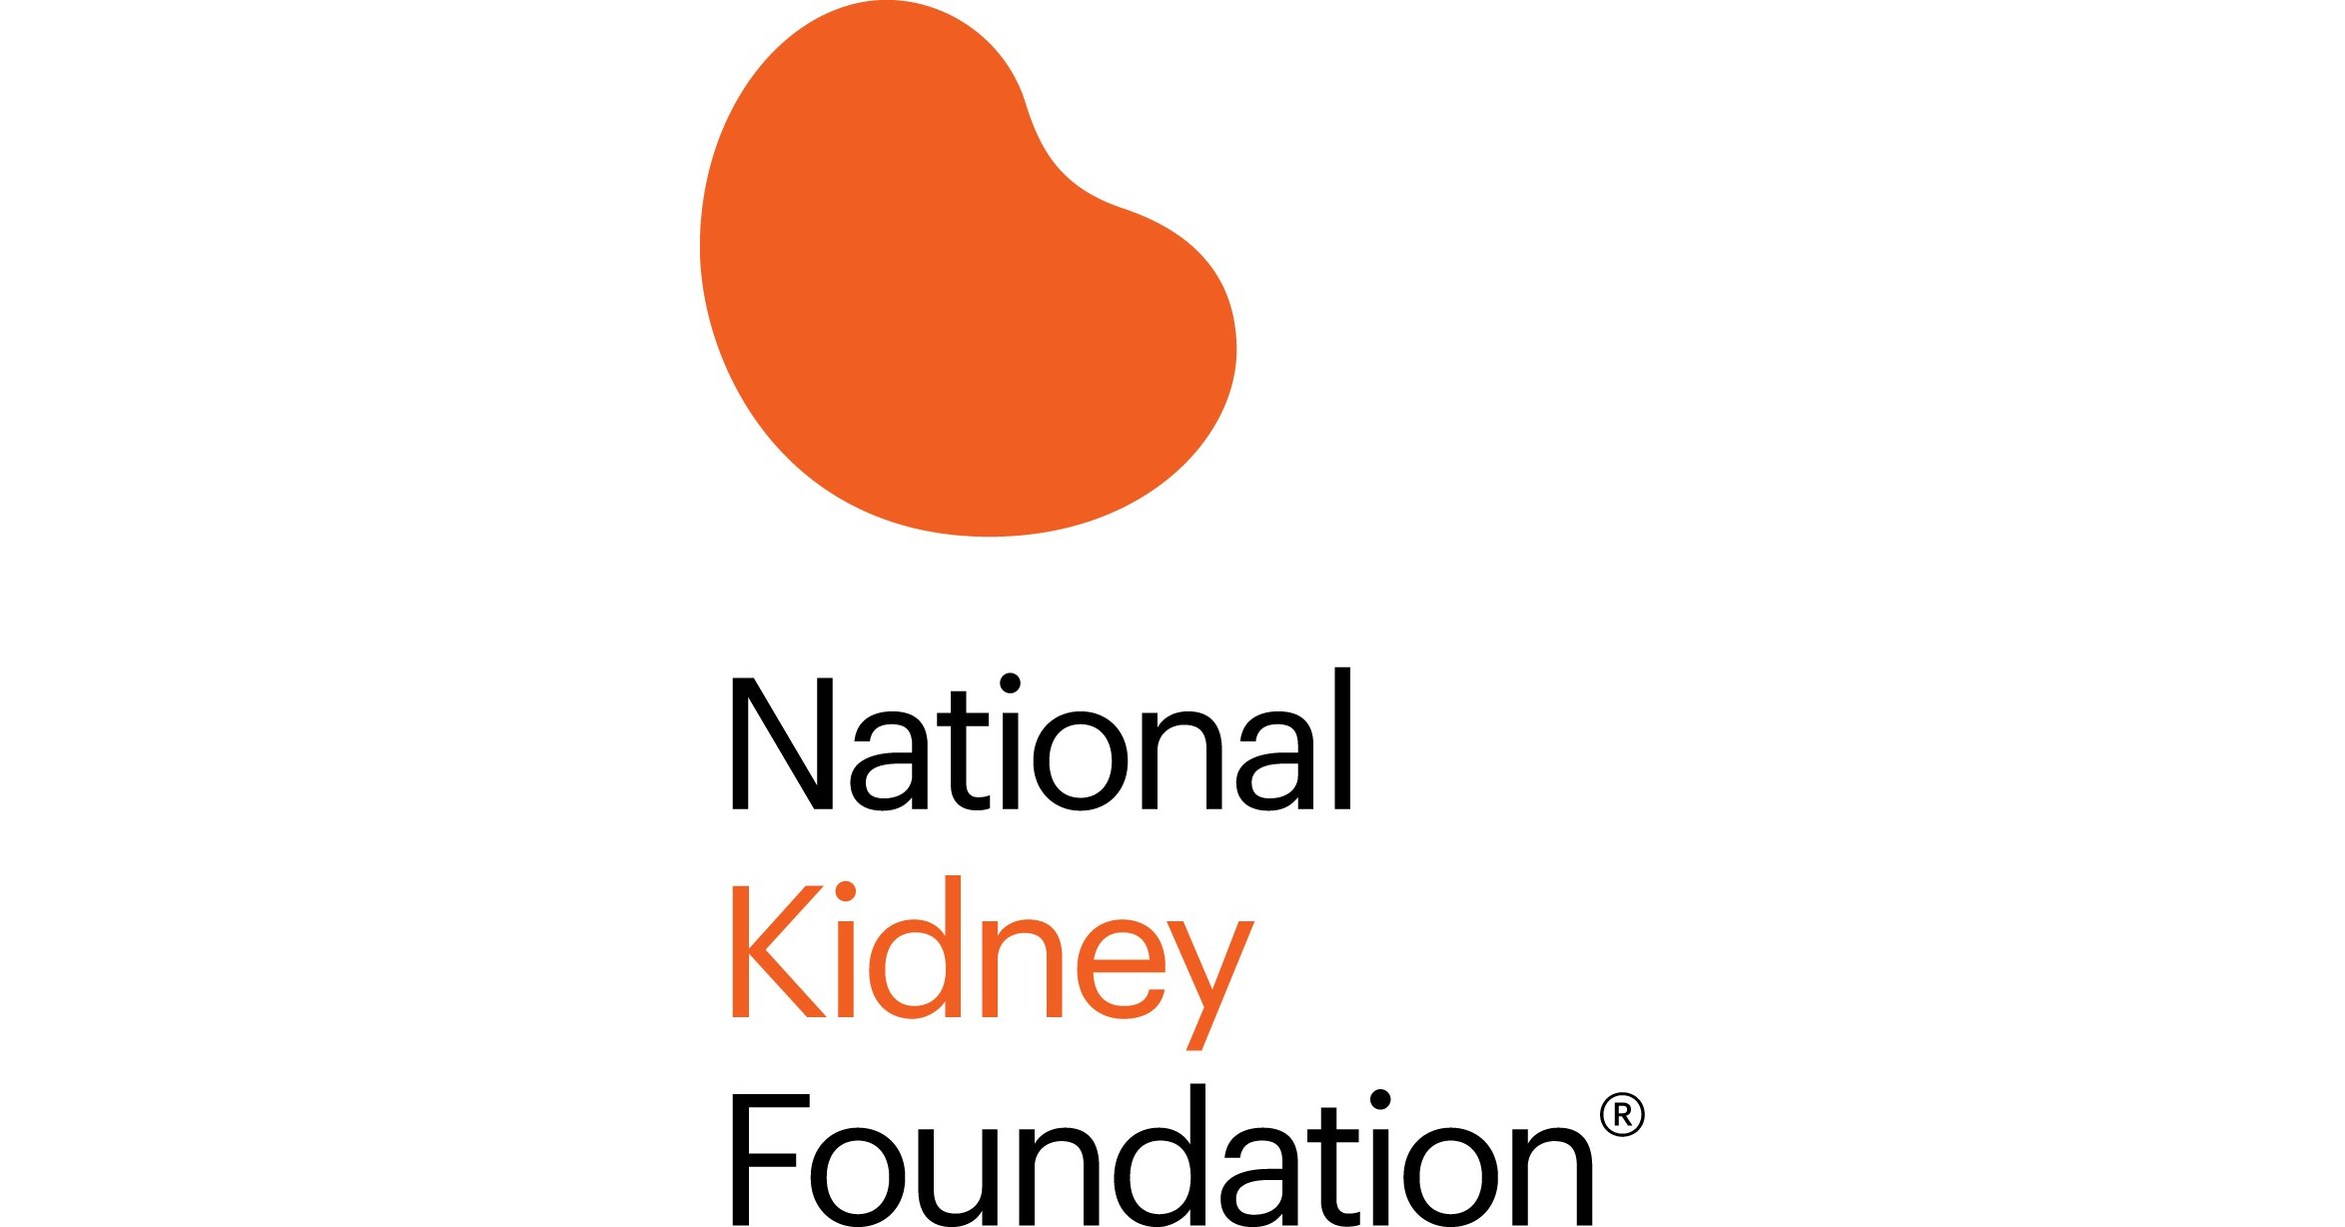 National Kidney Foundation Statement on the California Ballot